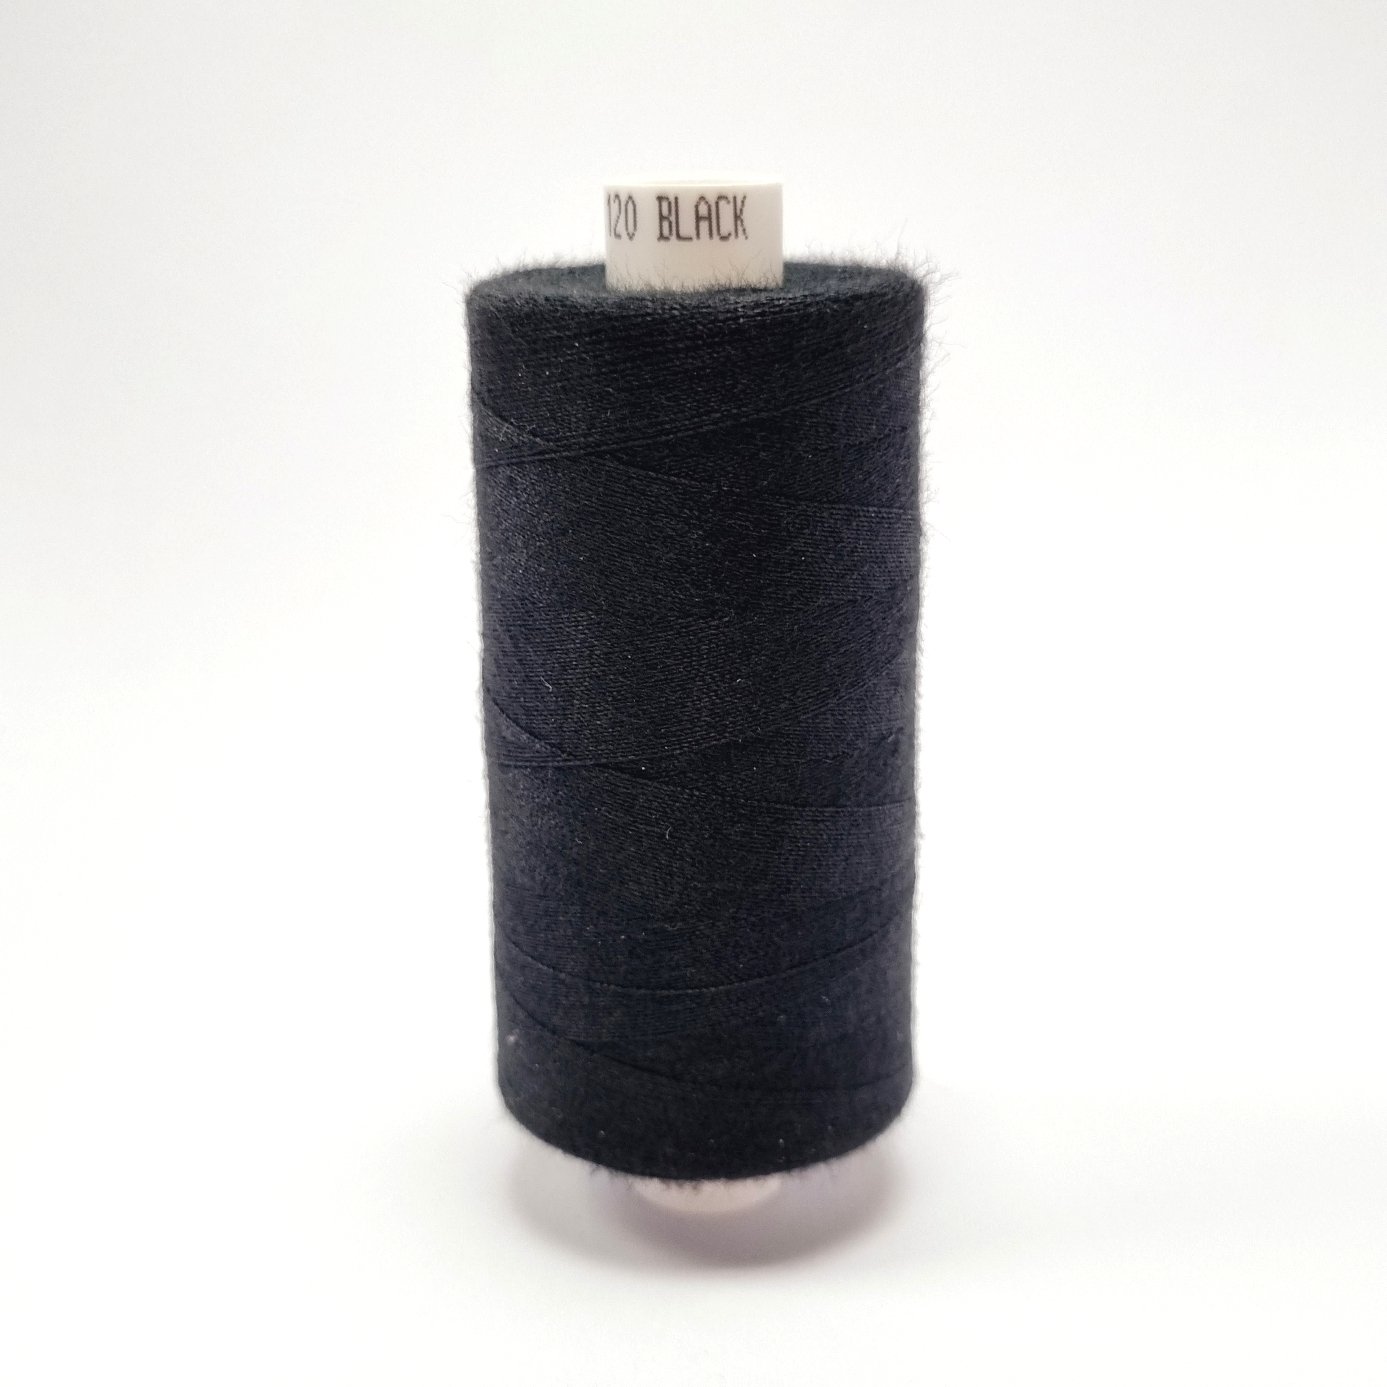 Moon Thread, Black, 1000 yard reels 99p from Jaycotts Sewing Supplies